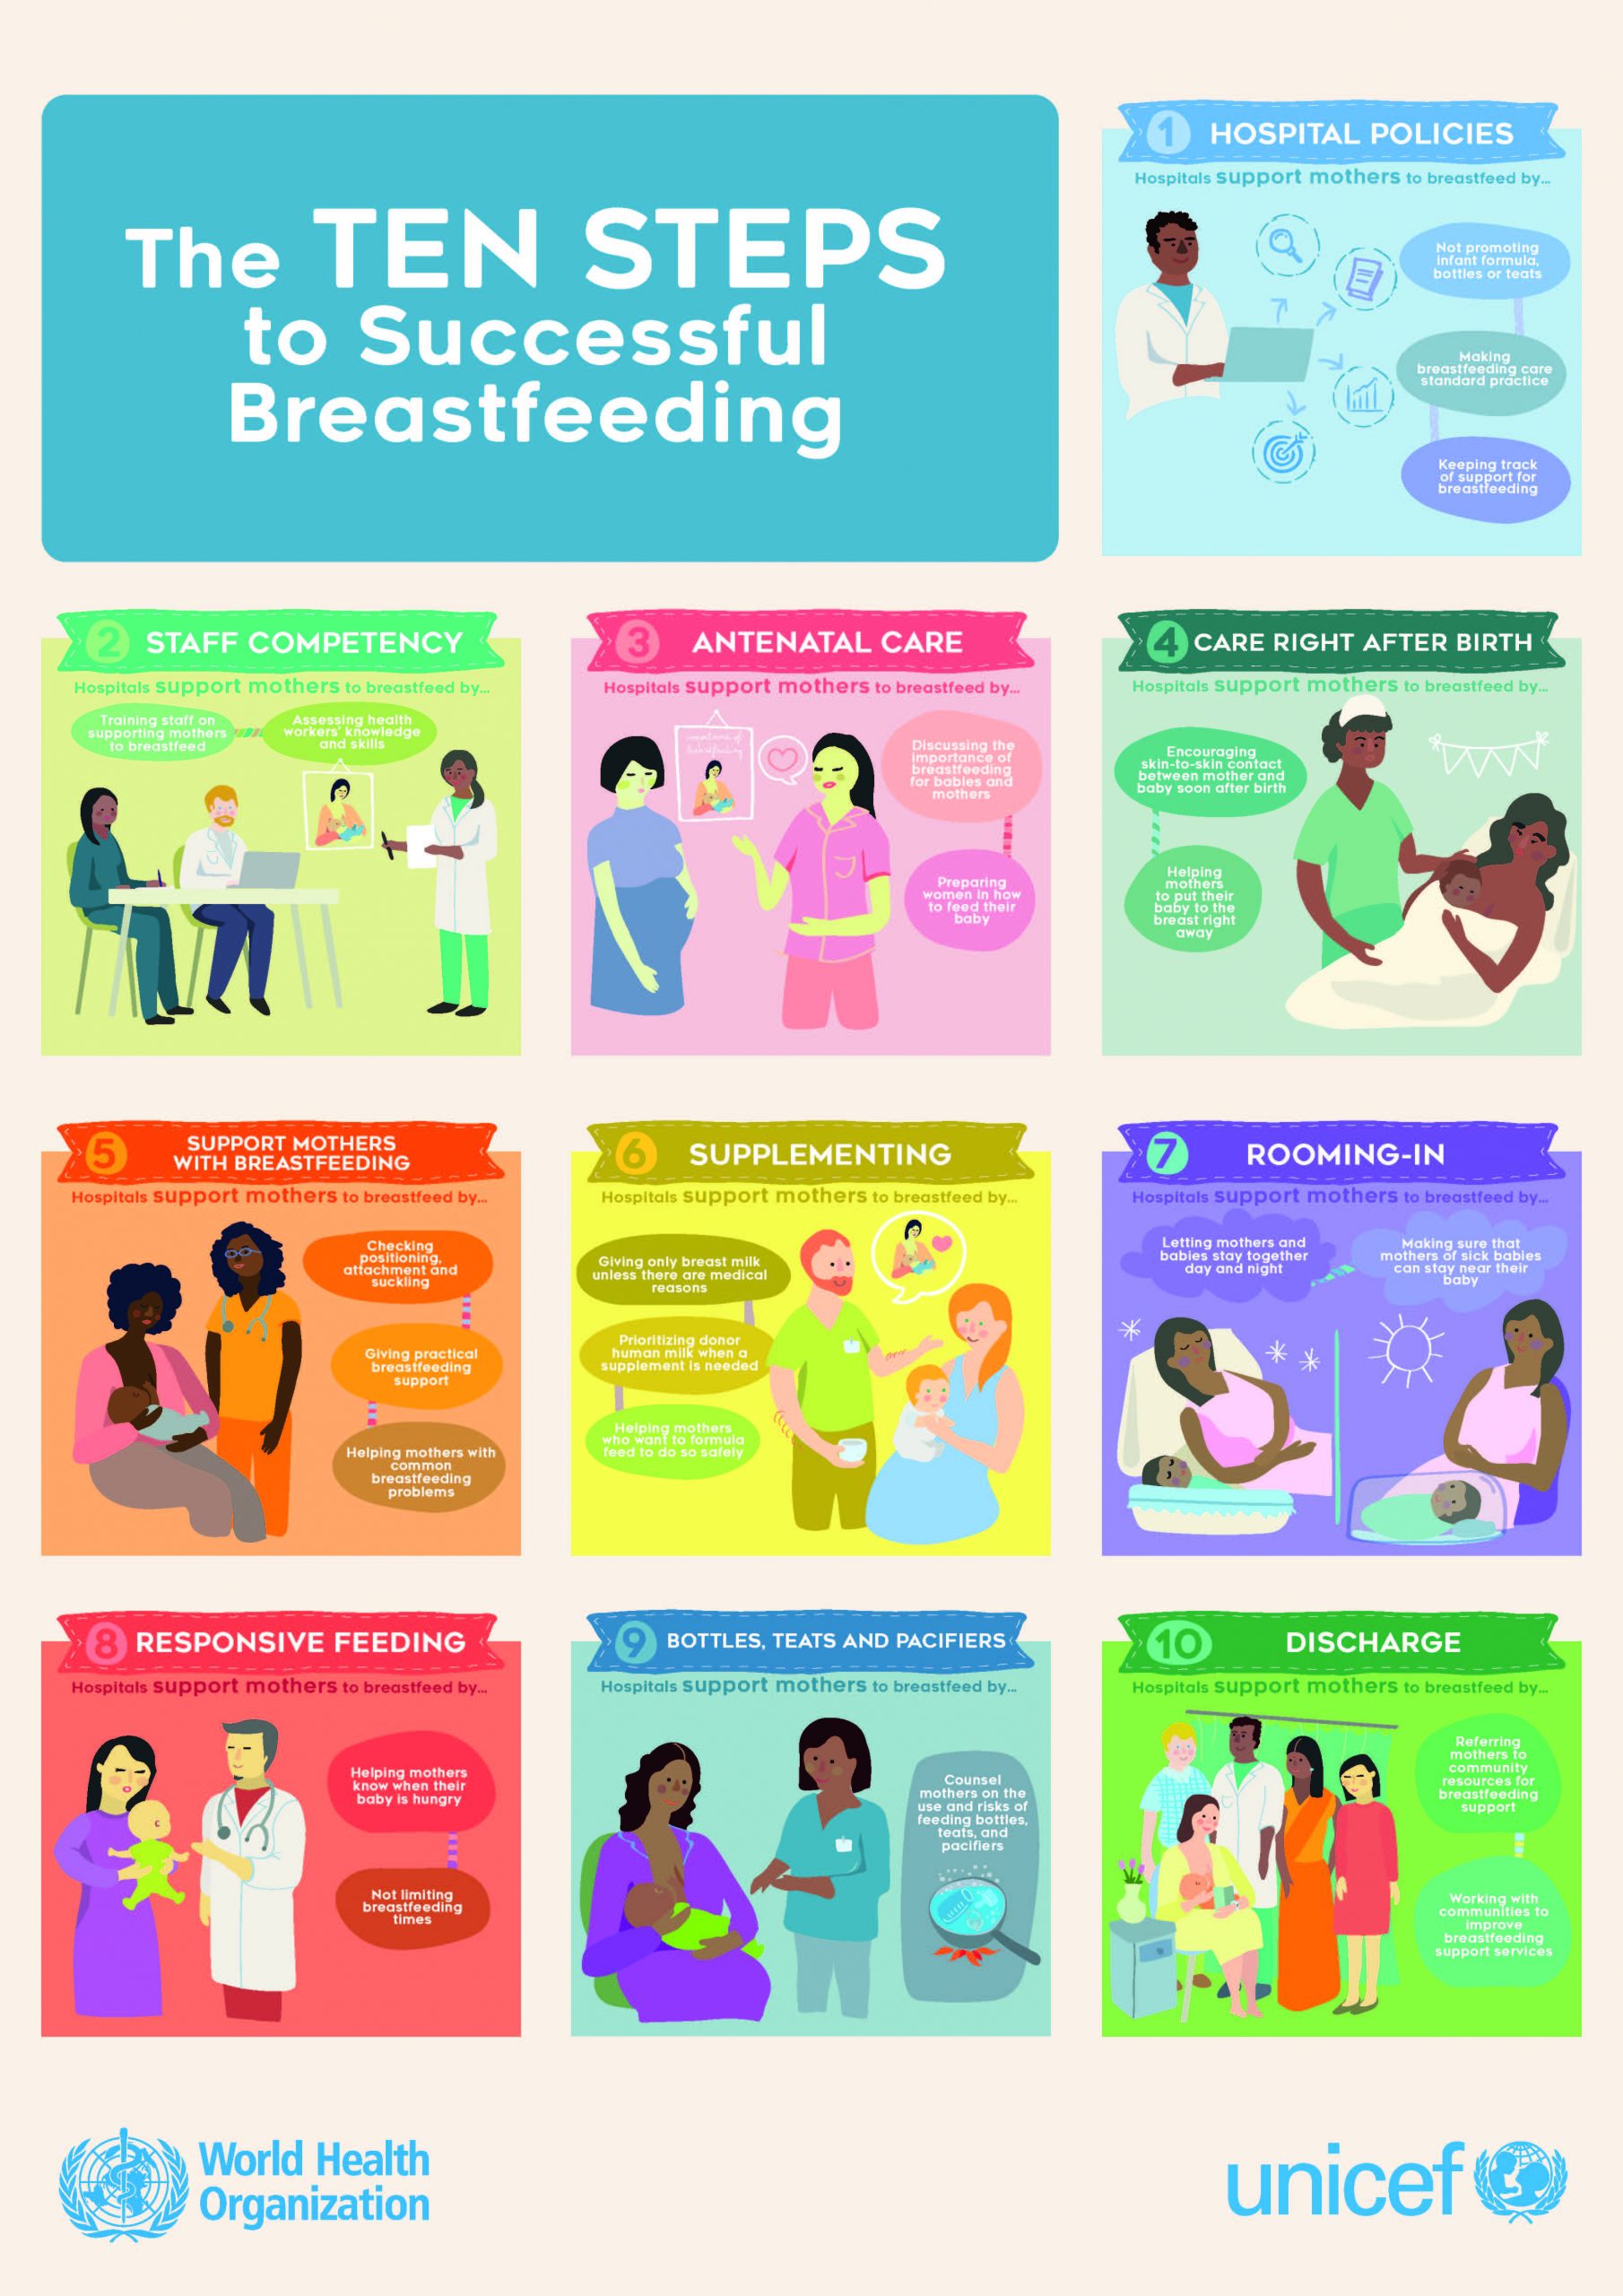 5 benefits of breastfeeding